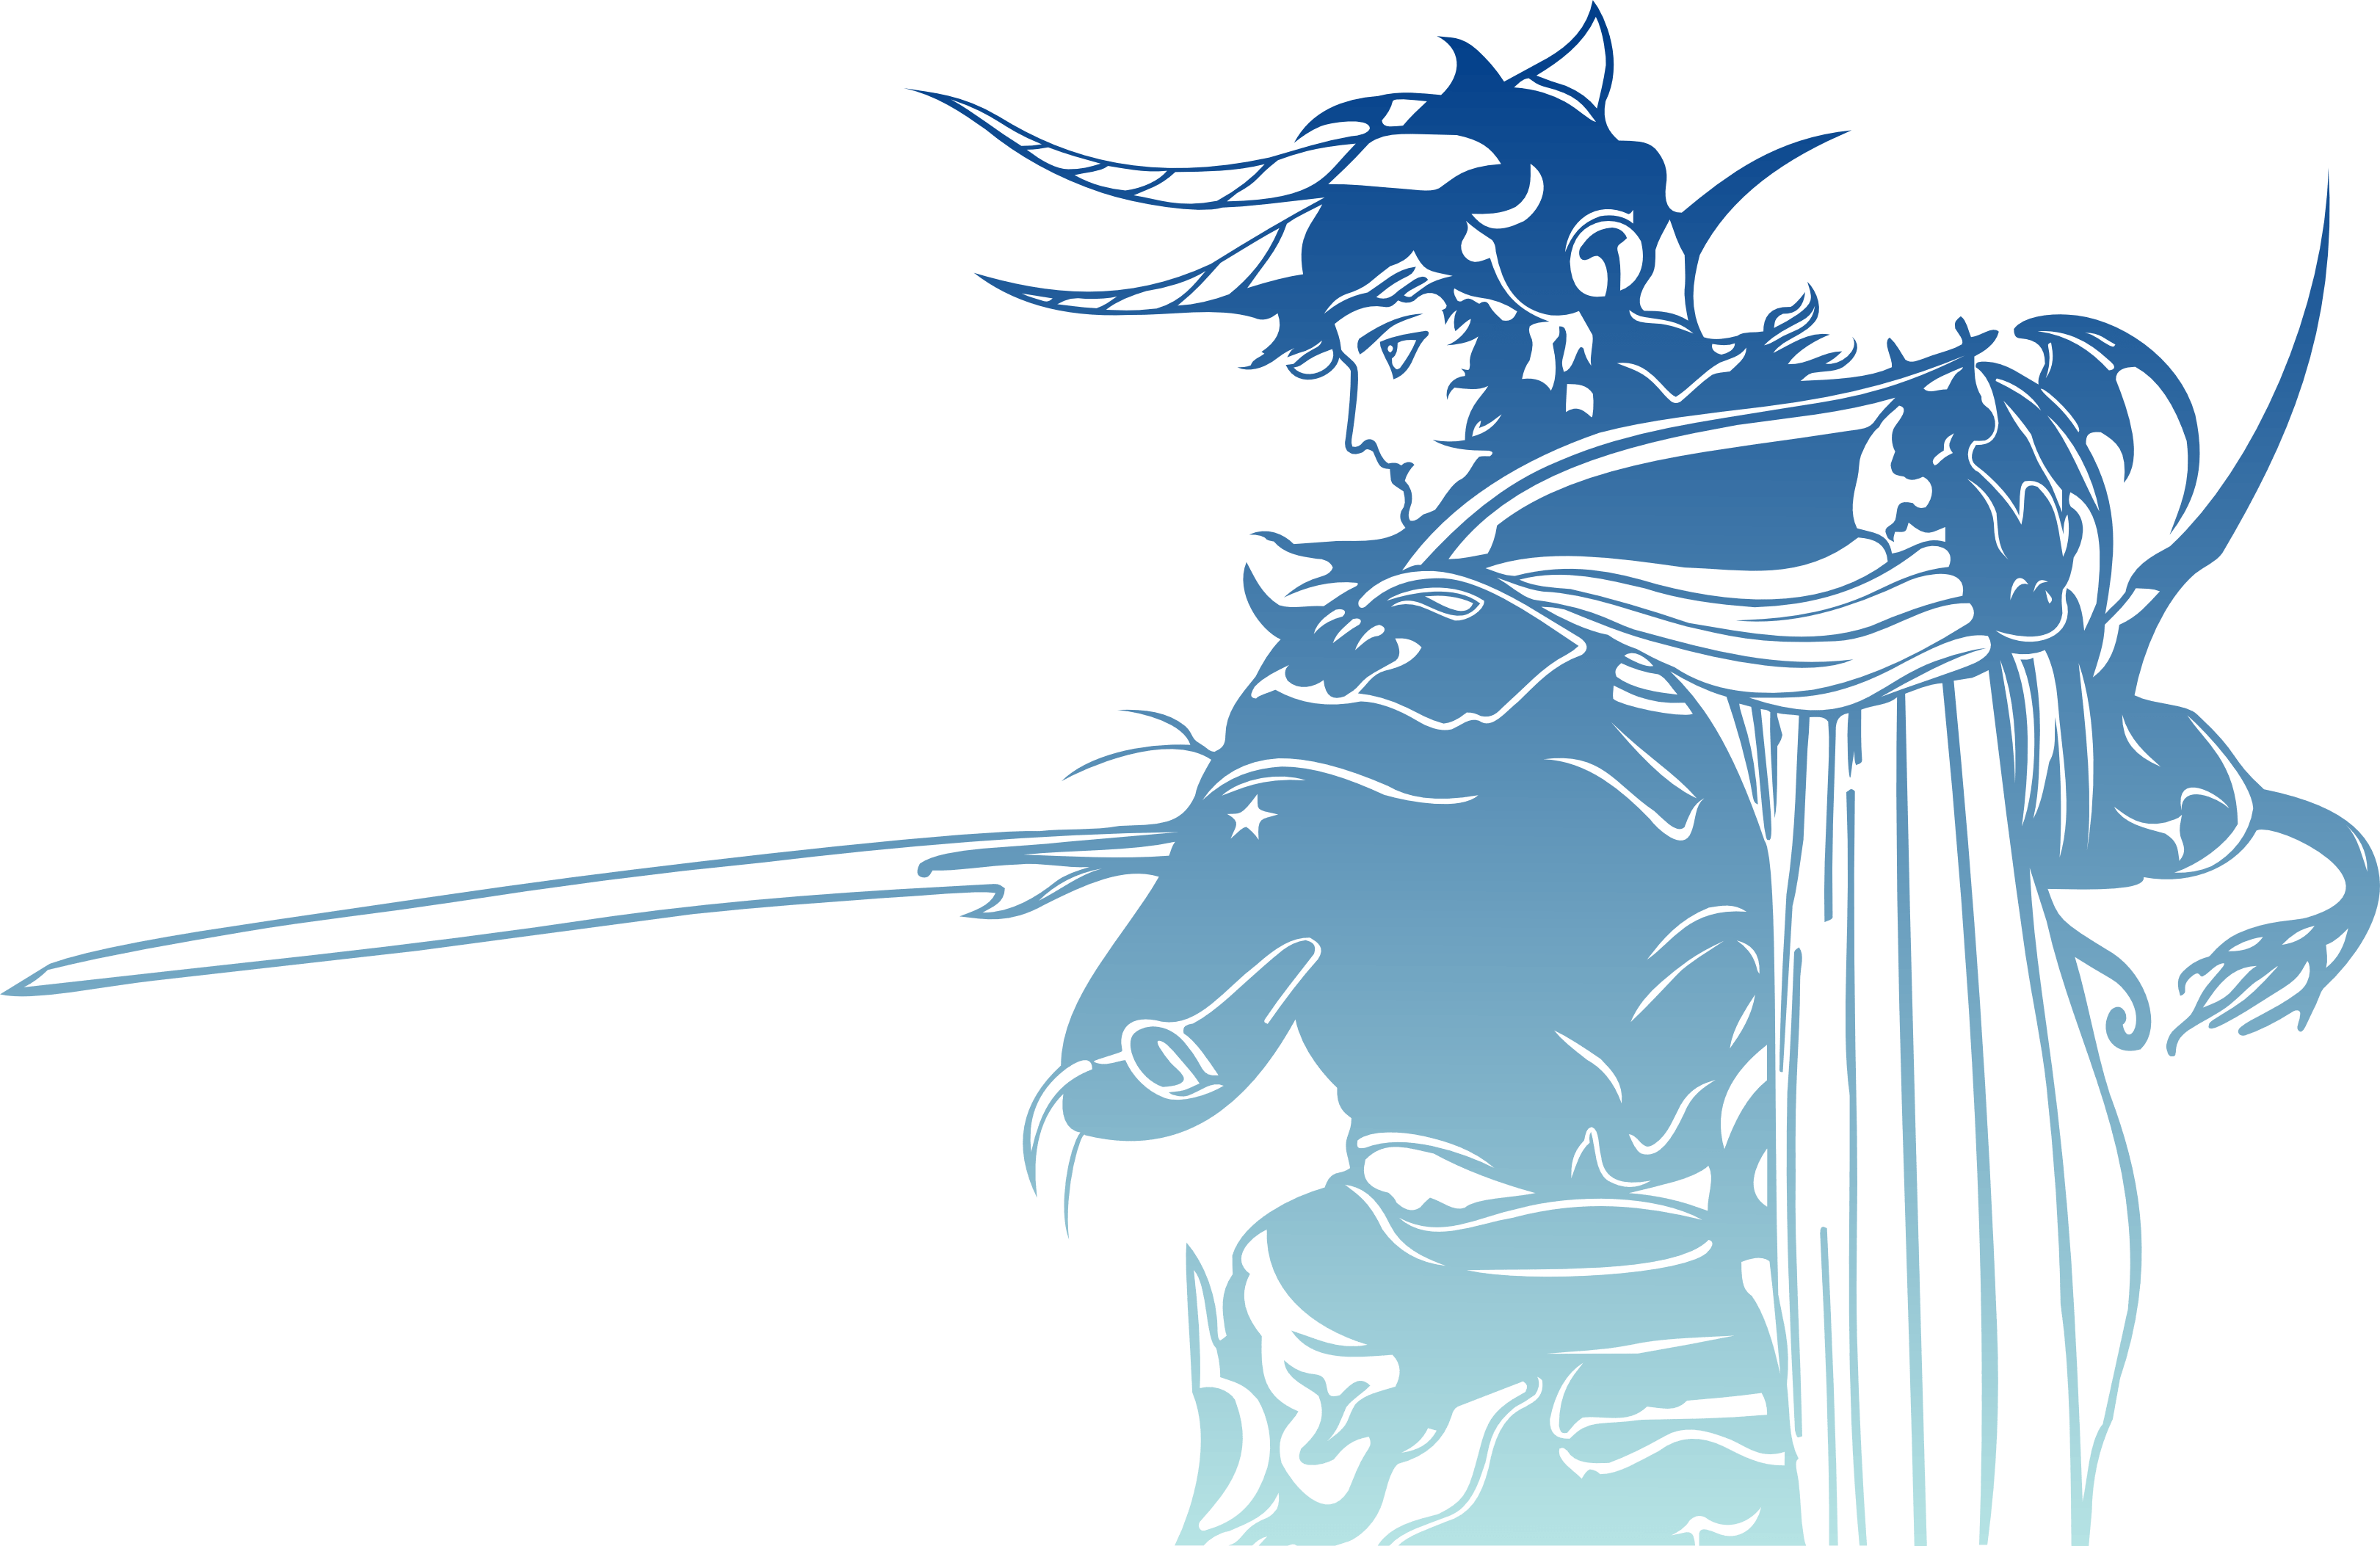 Final Fantasy 1 Logo without words for details -- Original